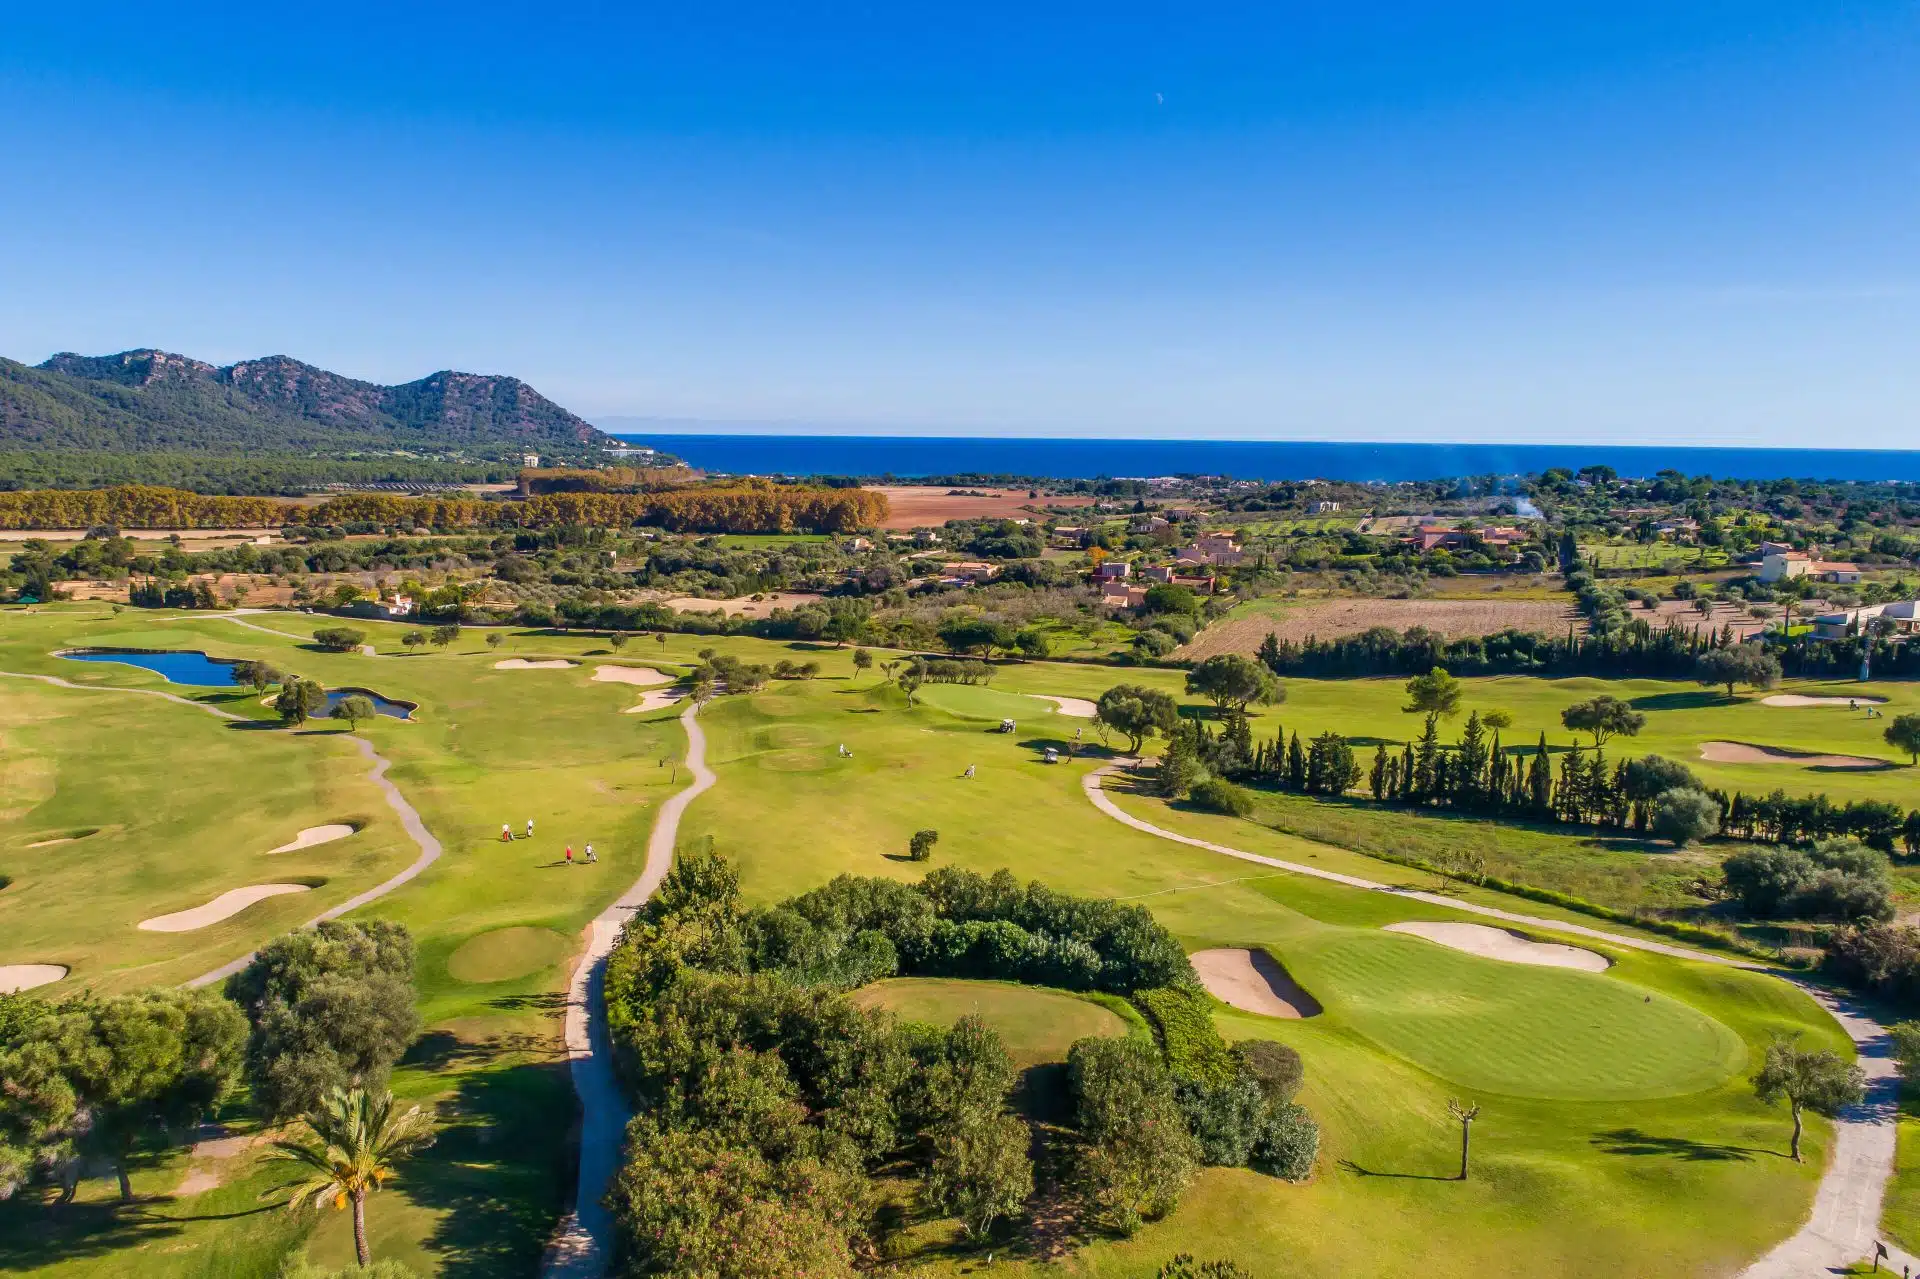 Pula Golf Resort, Mallorca